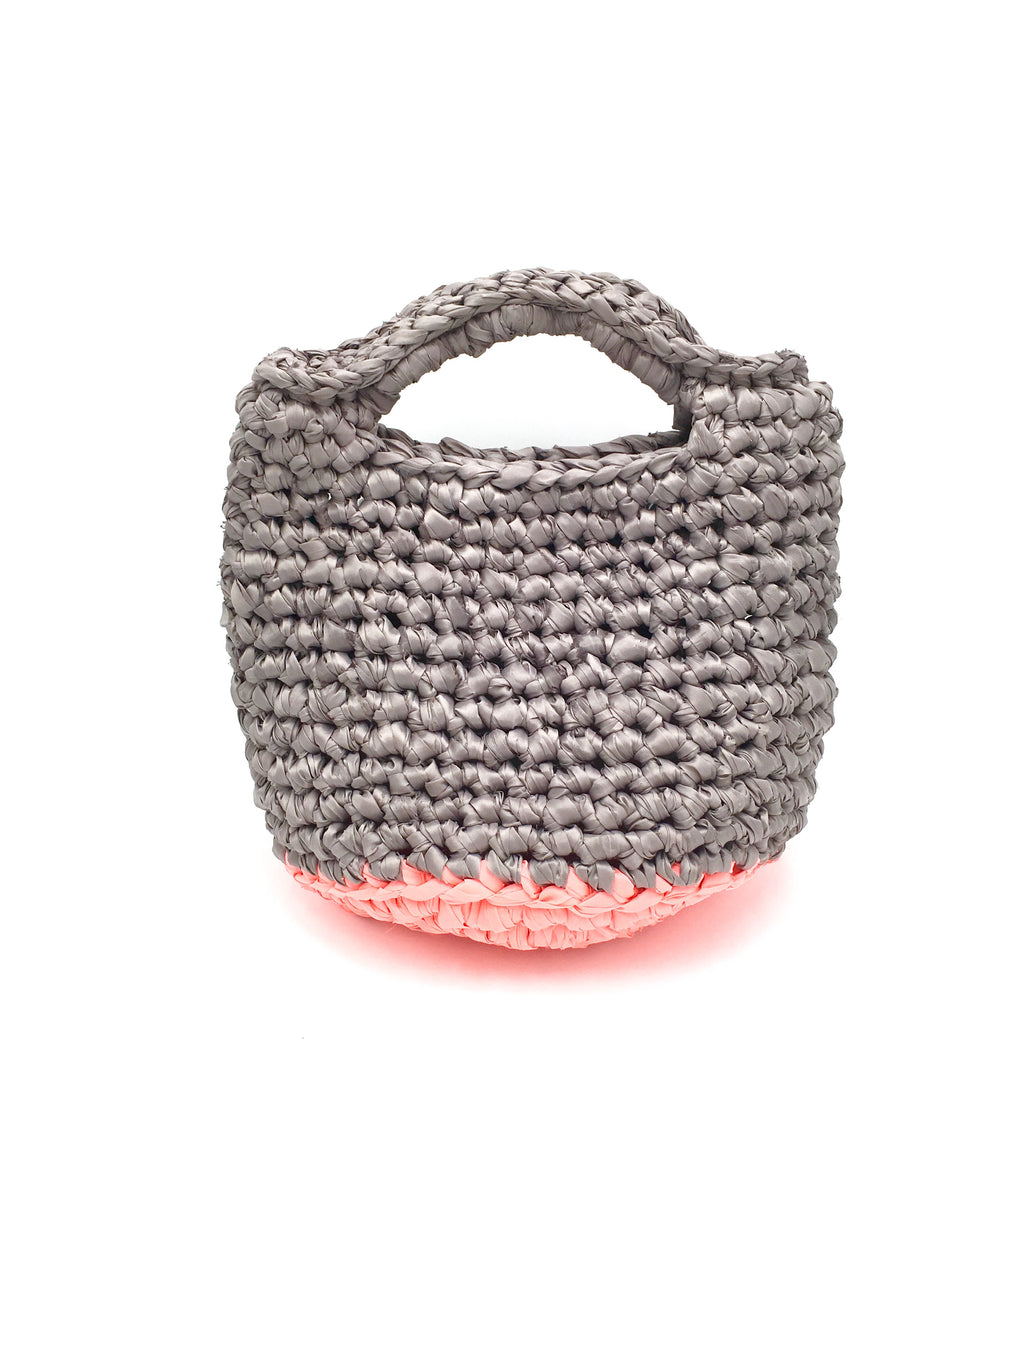 Crochet.me bag